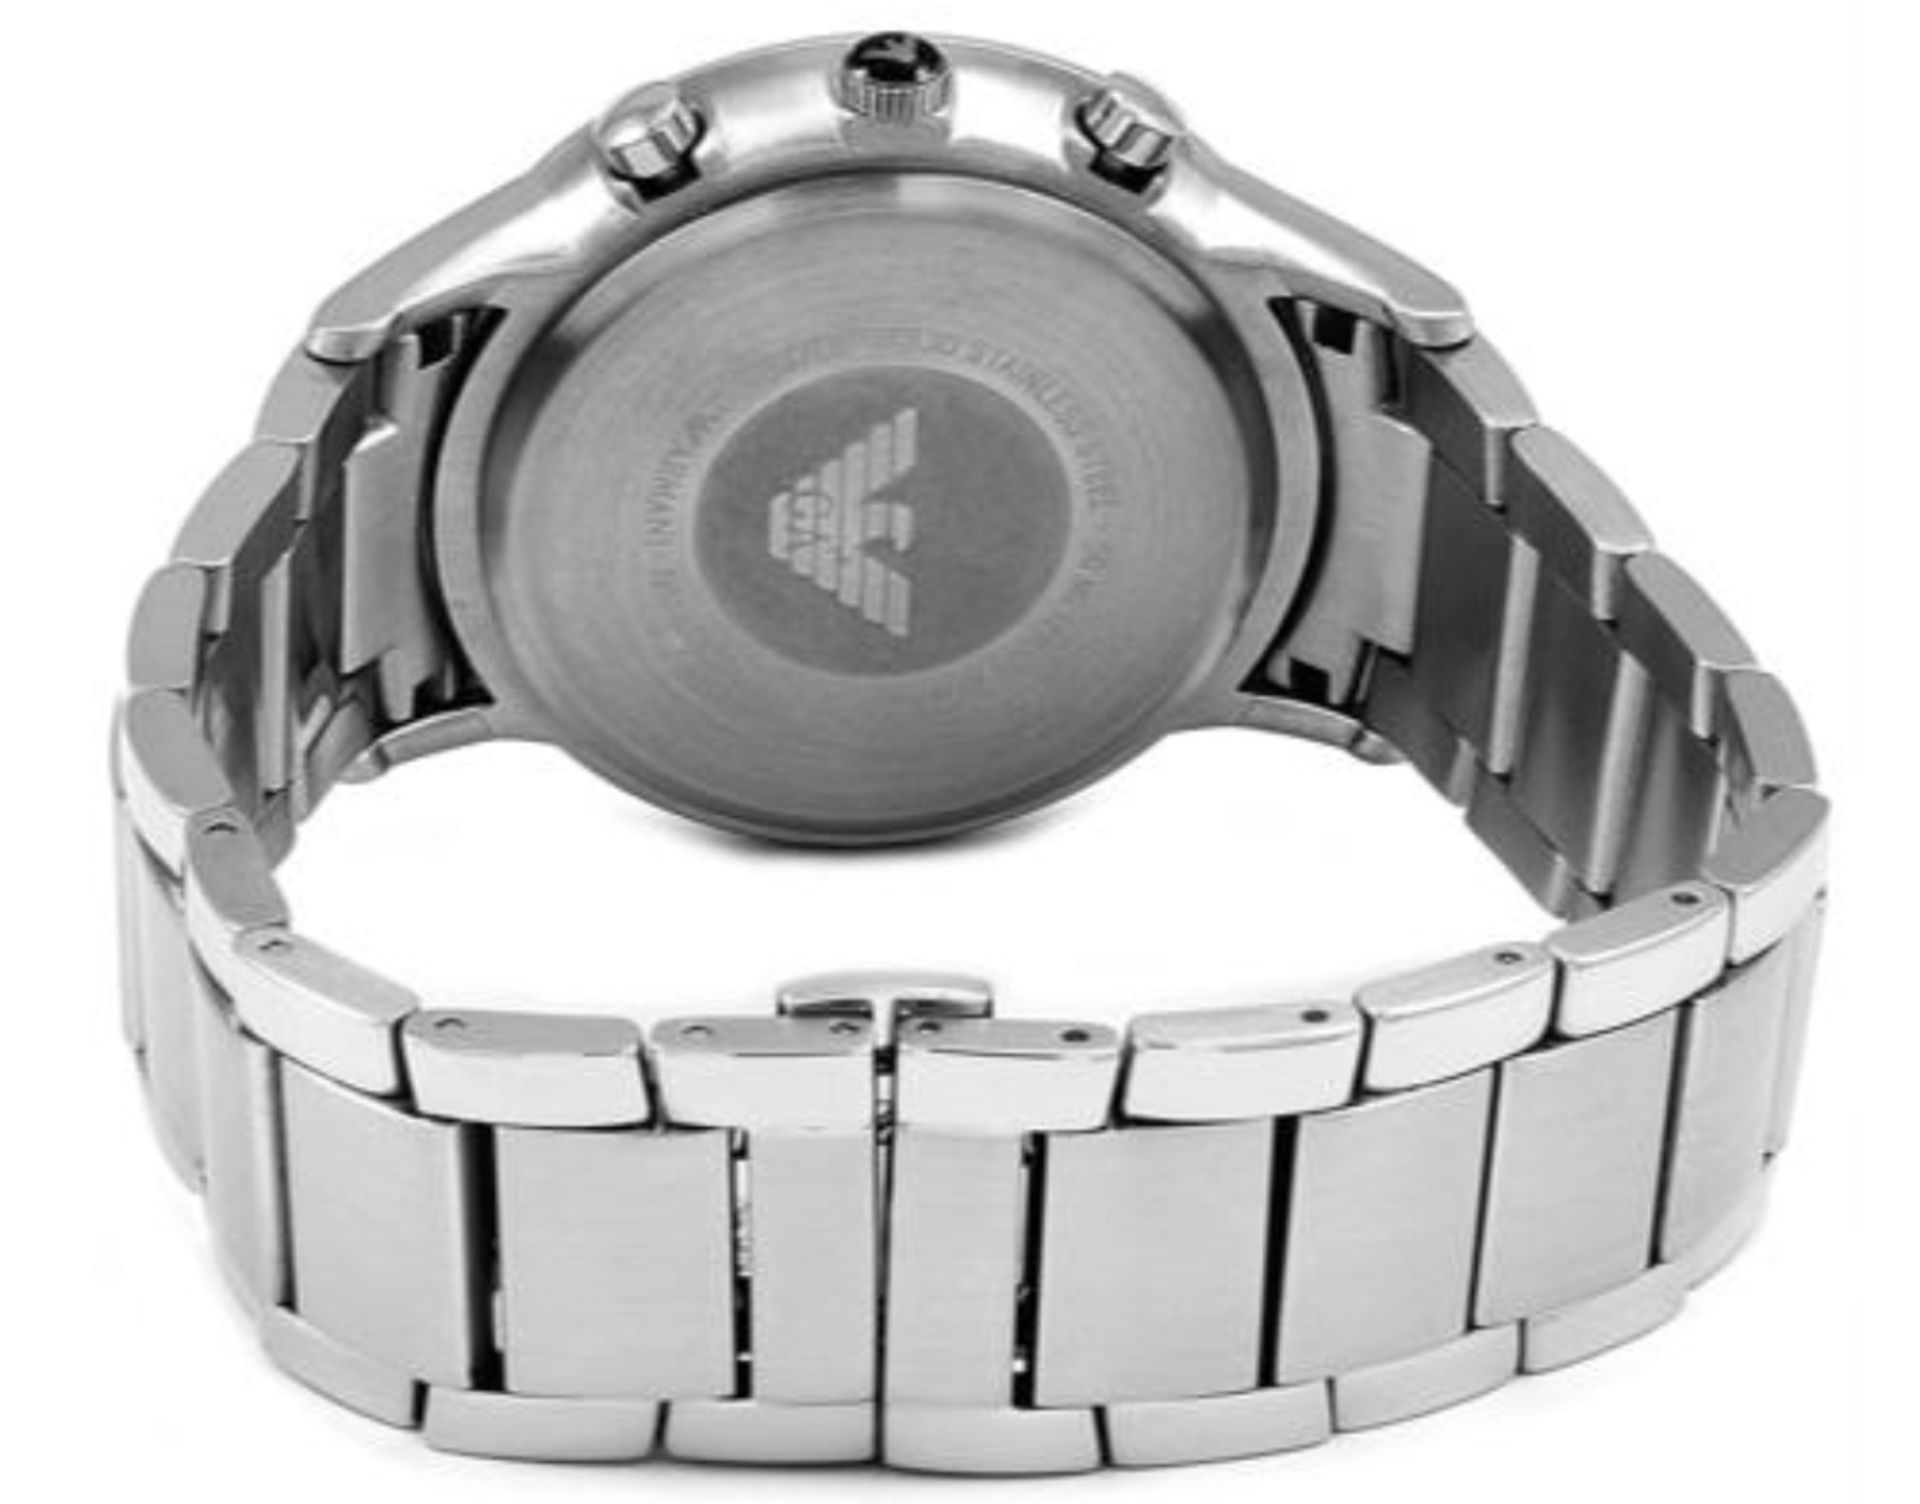 Emporio Armani AR2434 Men's Renato Silver Bracelet Chronograph Watch - Image 5 of 6